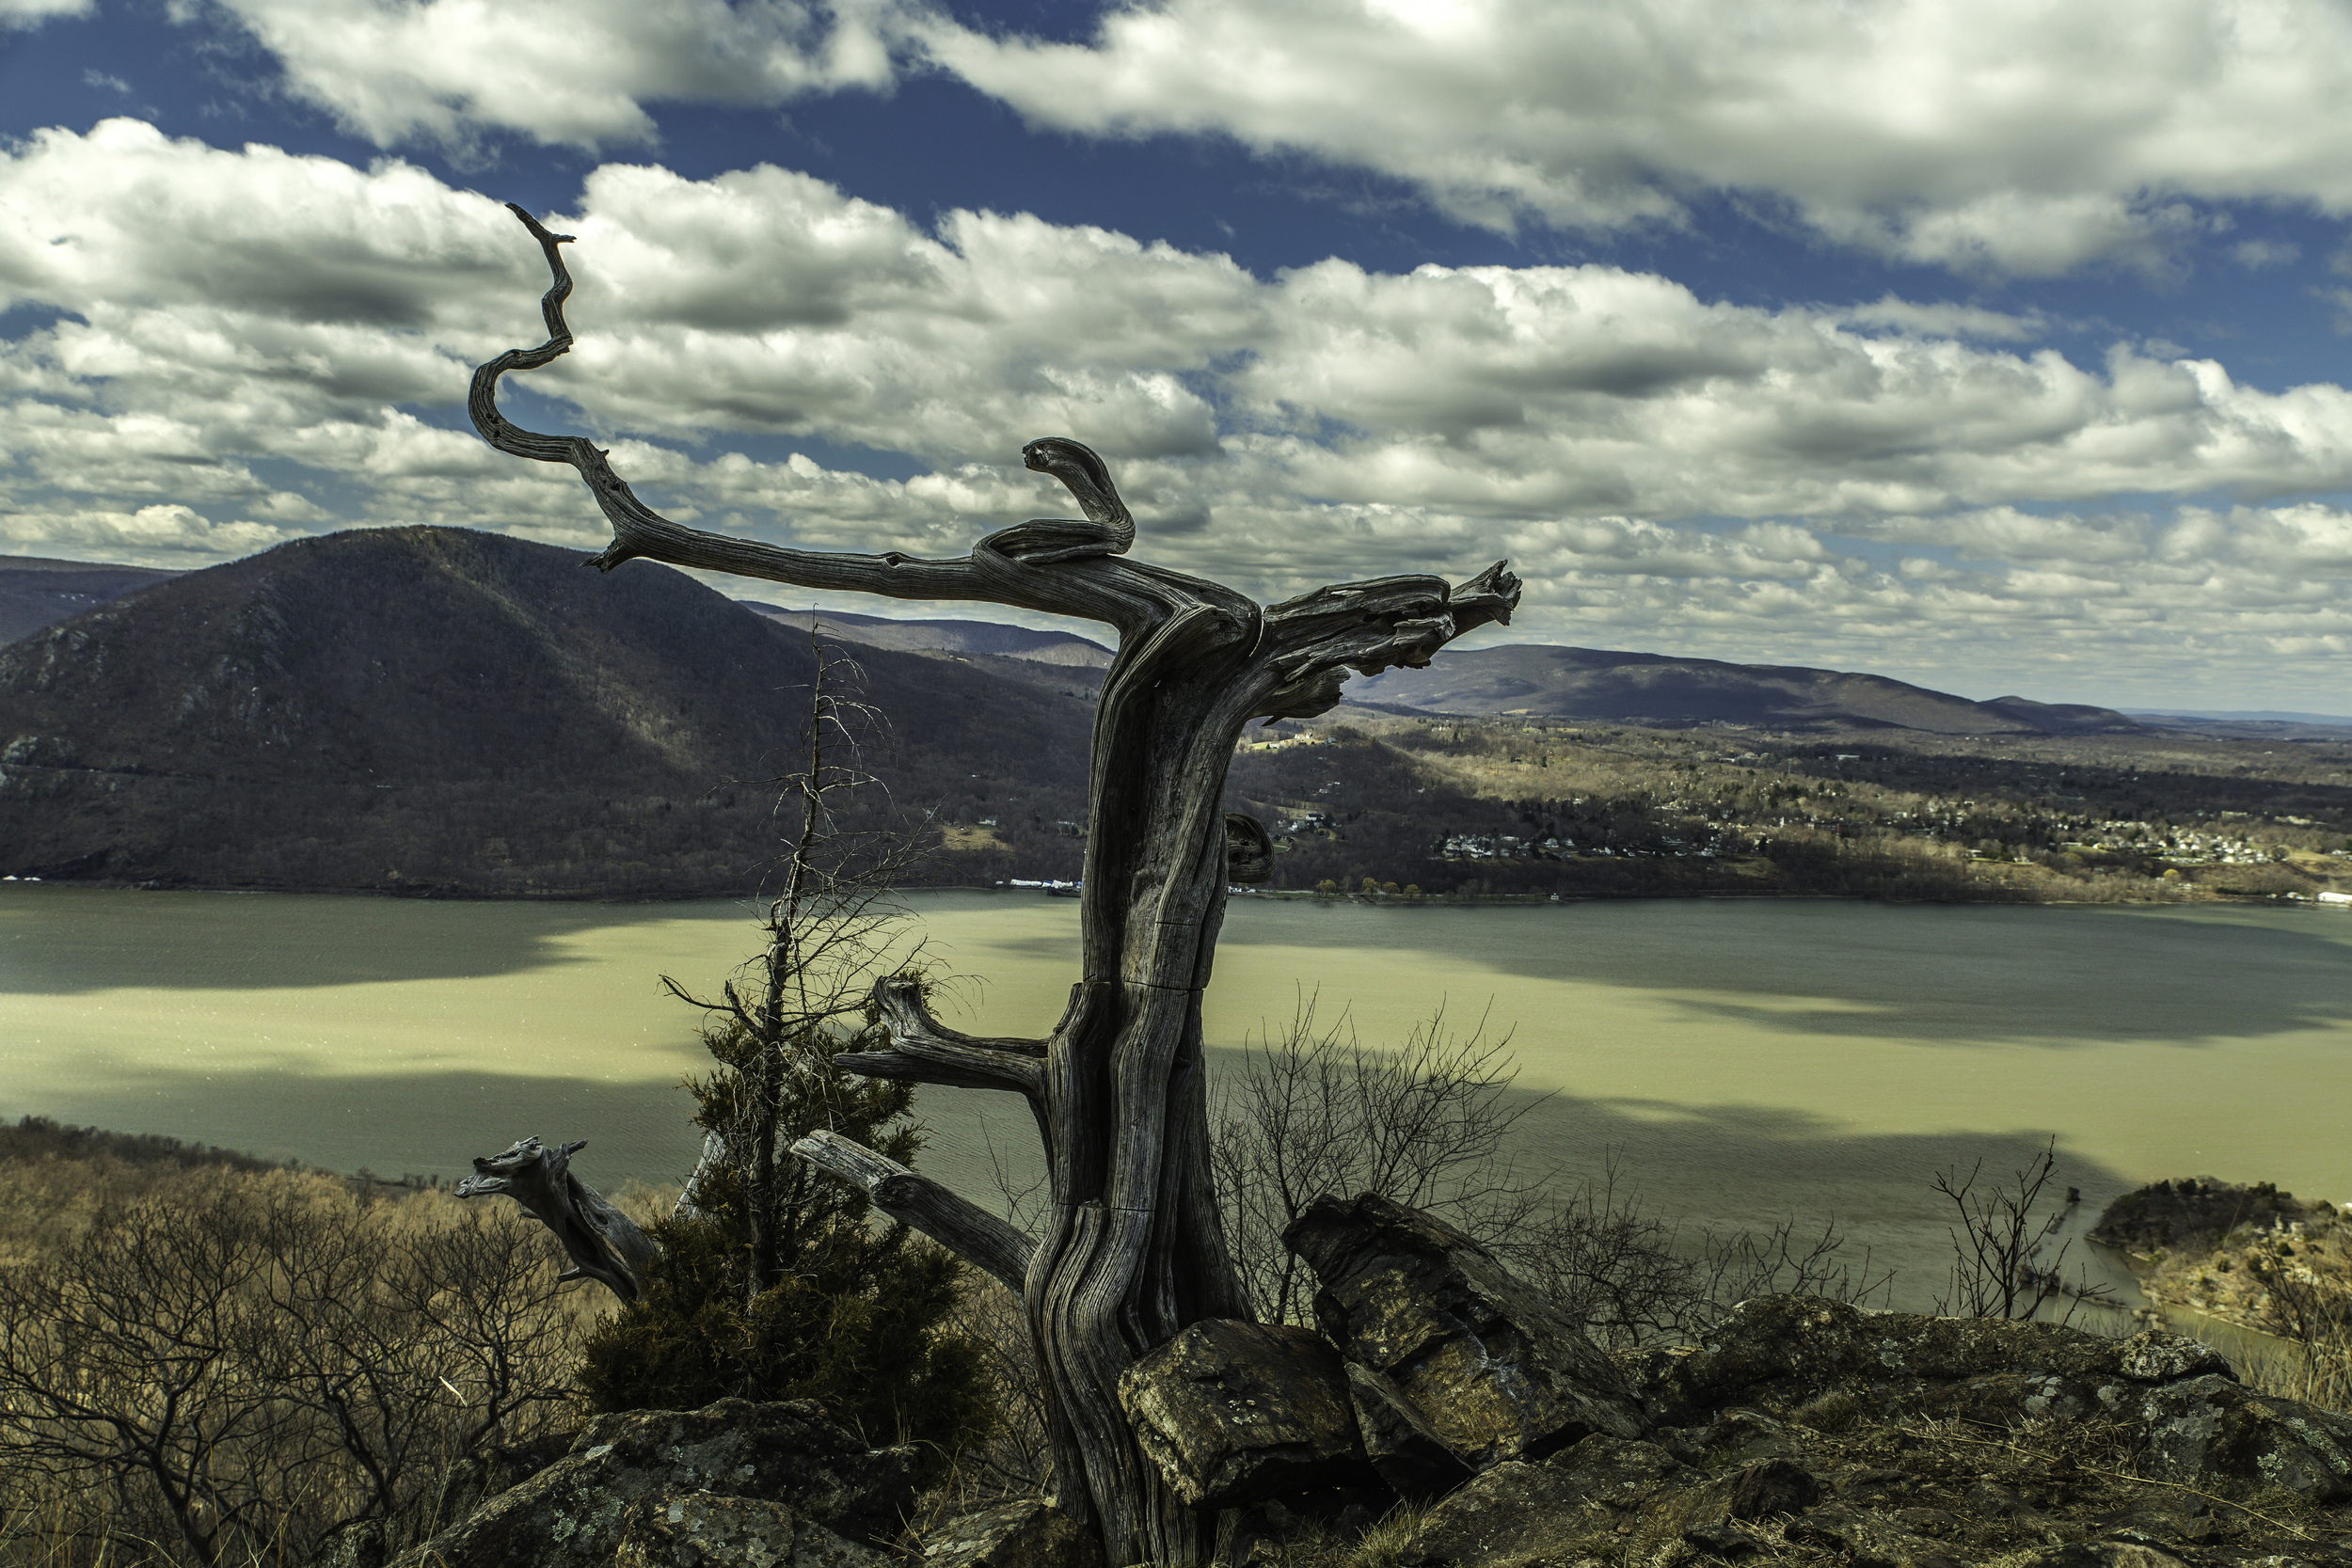 Hudson Valley: Gnarled Tree by Hudson (4/11/2015)